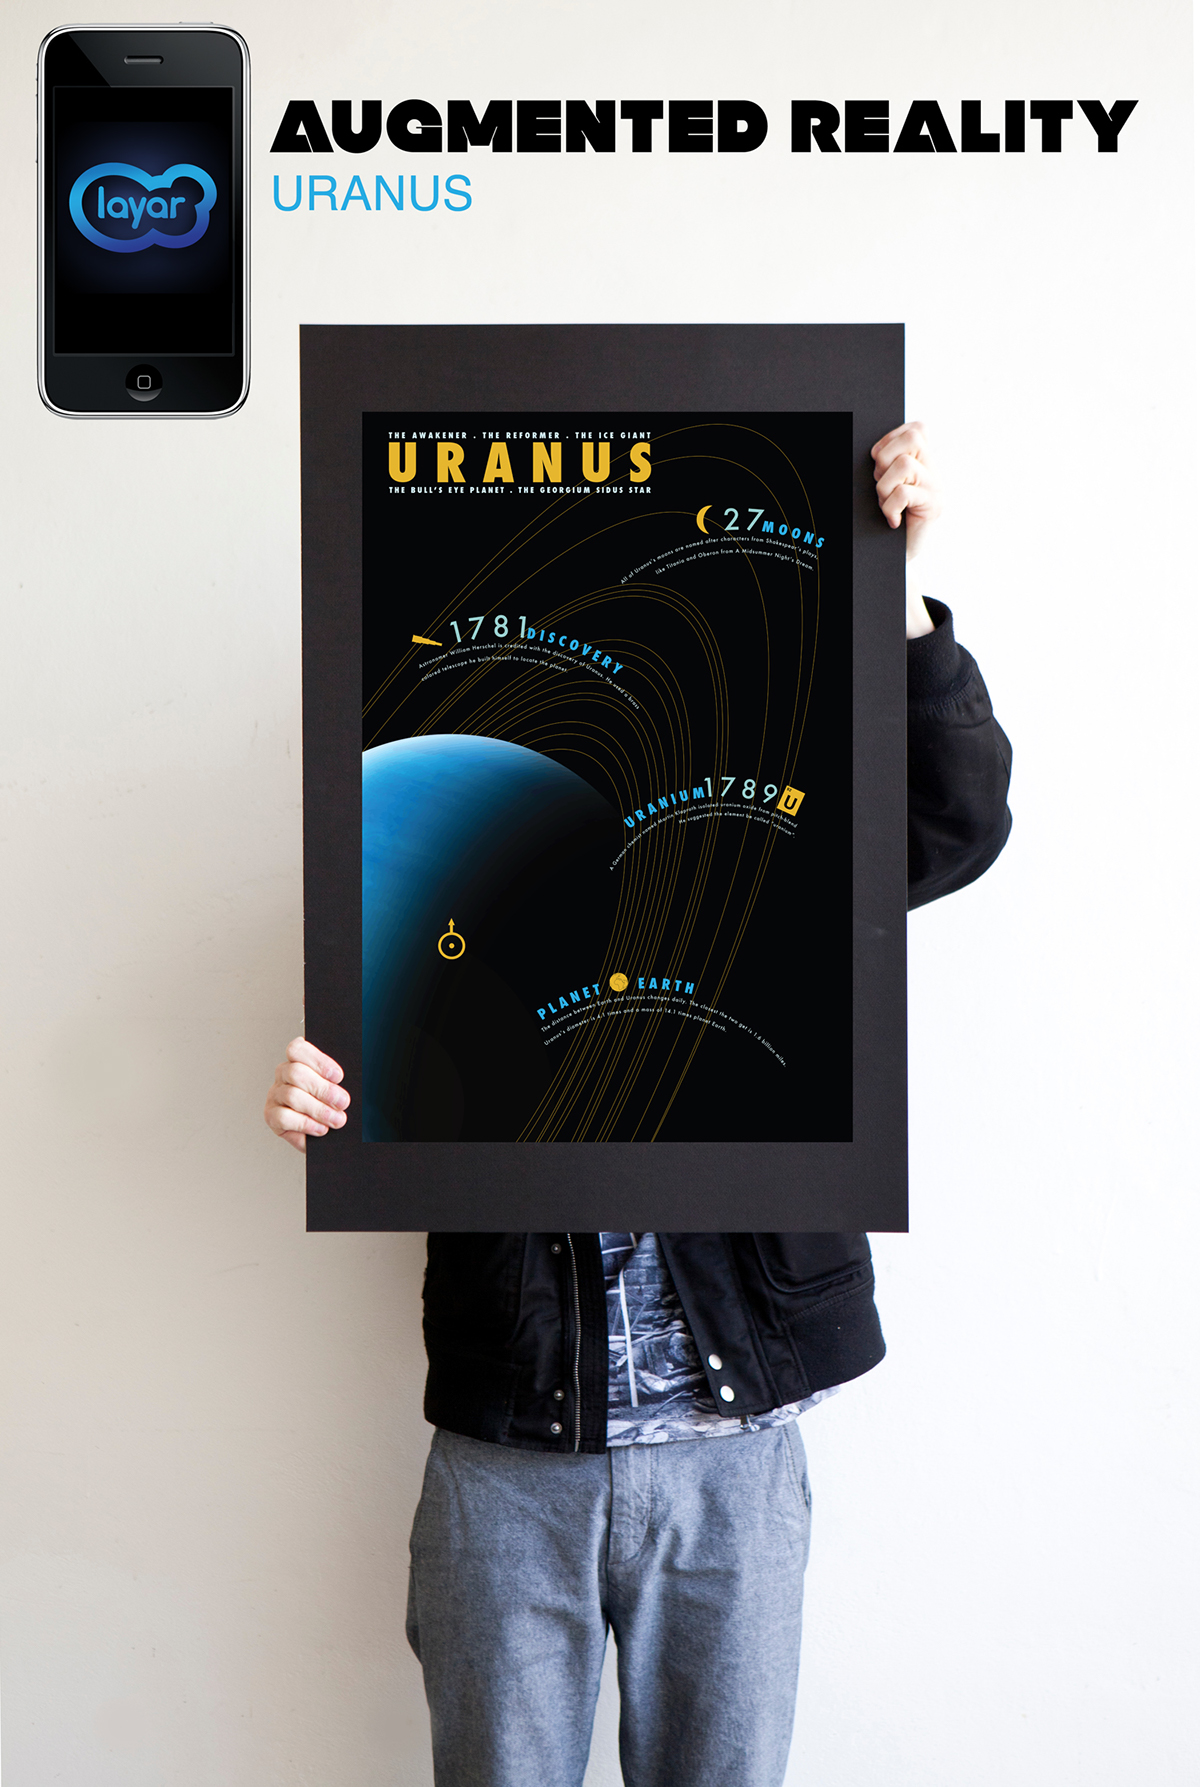 graphic design  Layar augmented reality print design  typography   Space  Planets solar system greek mythology uranus Ouranos   Poster Design greek gods universe digital photography 